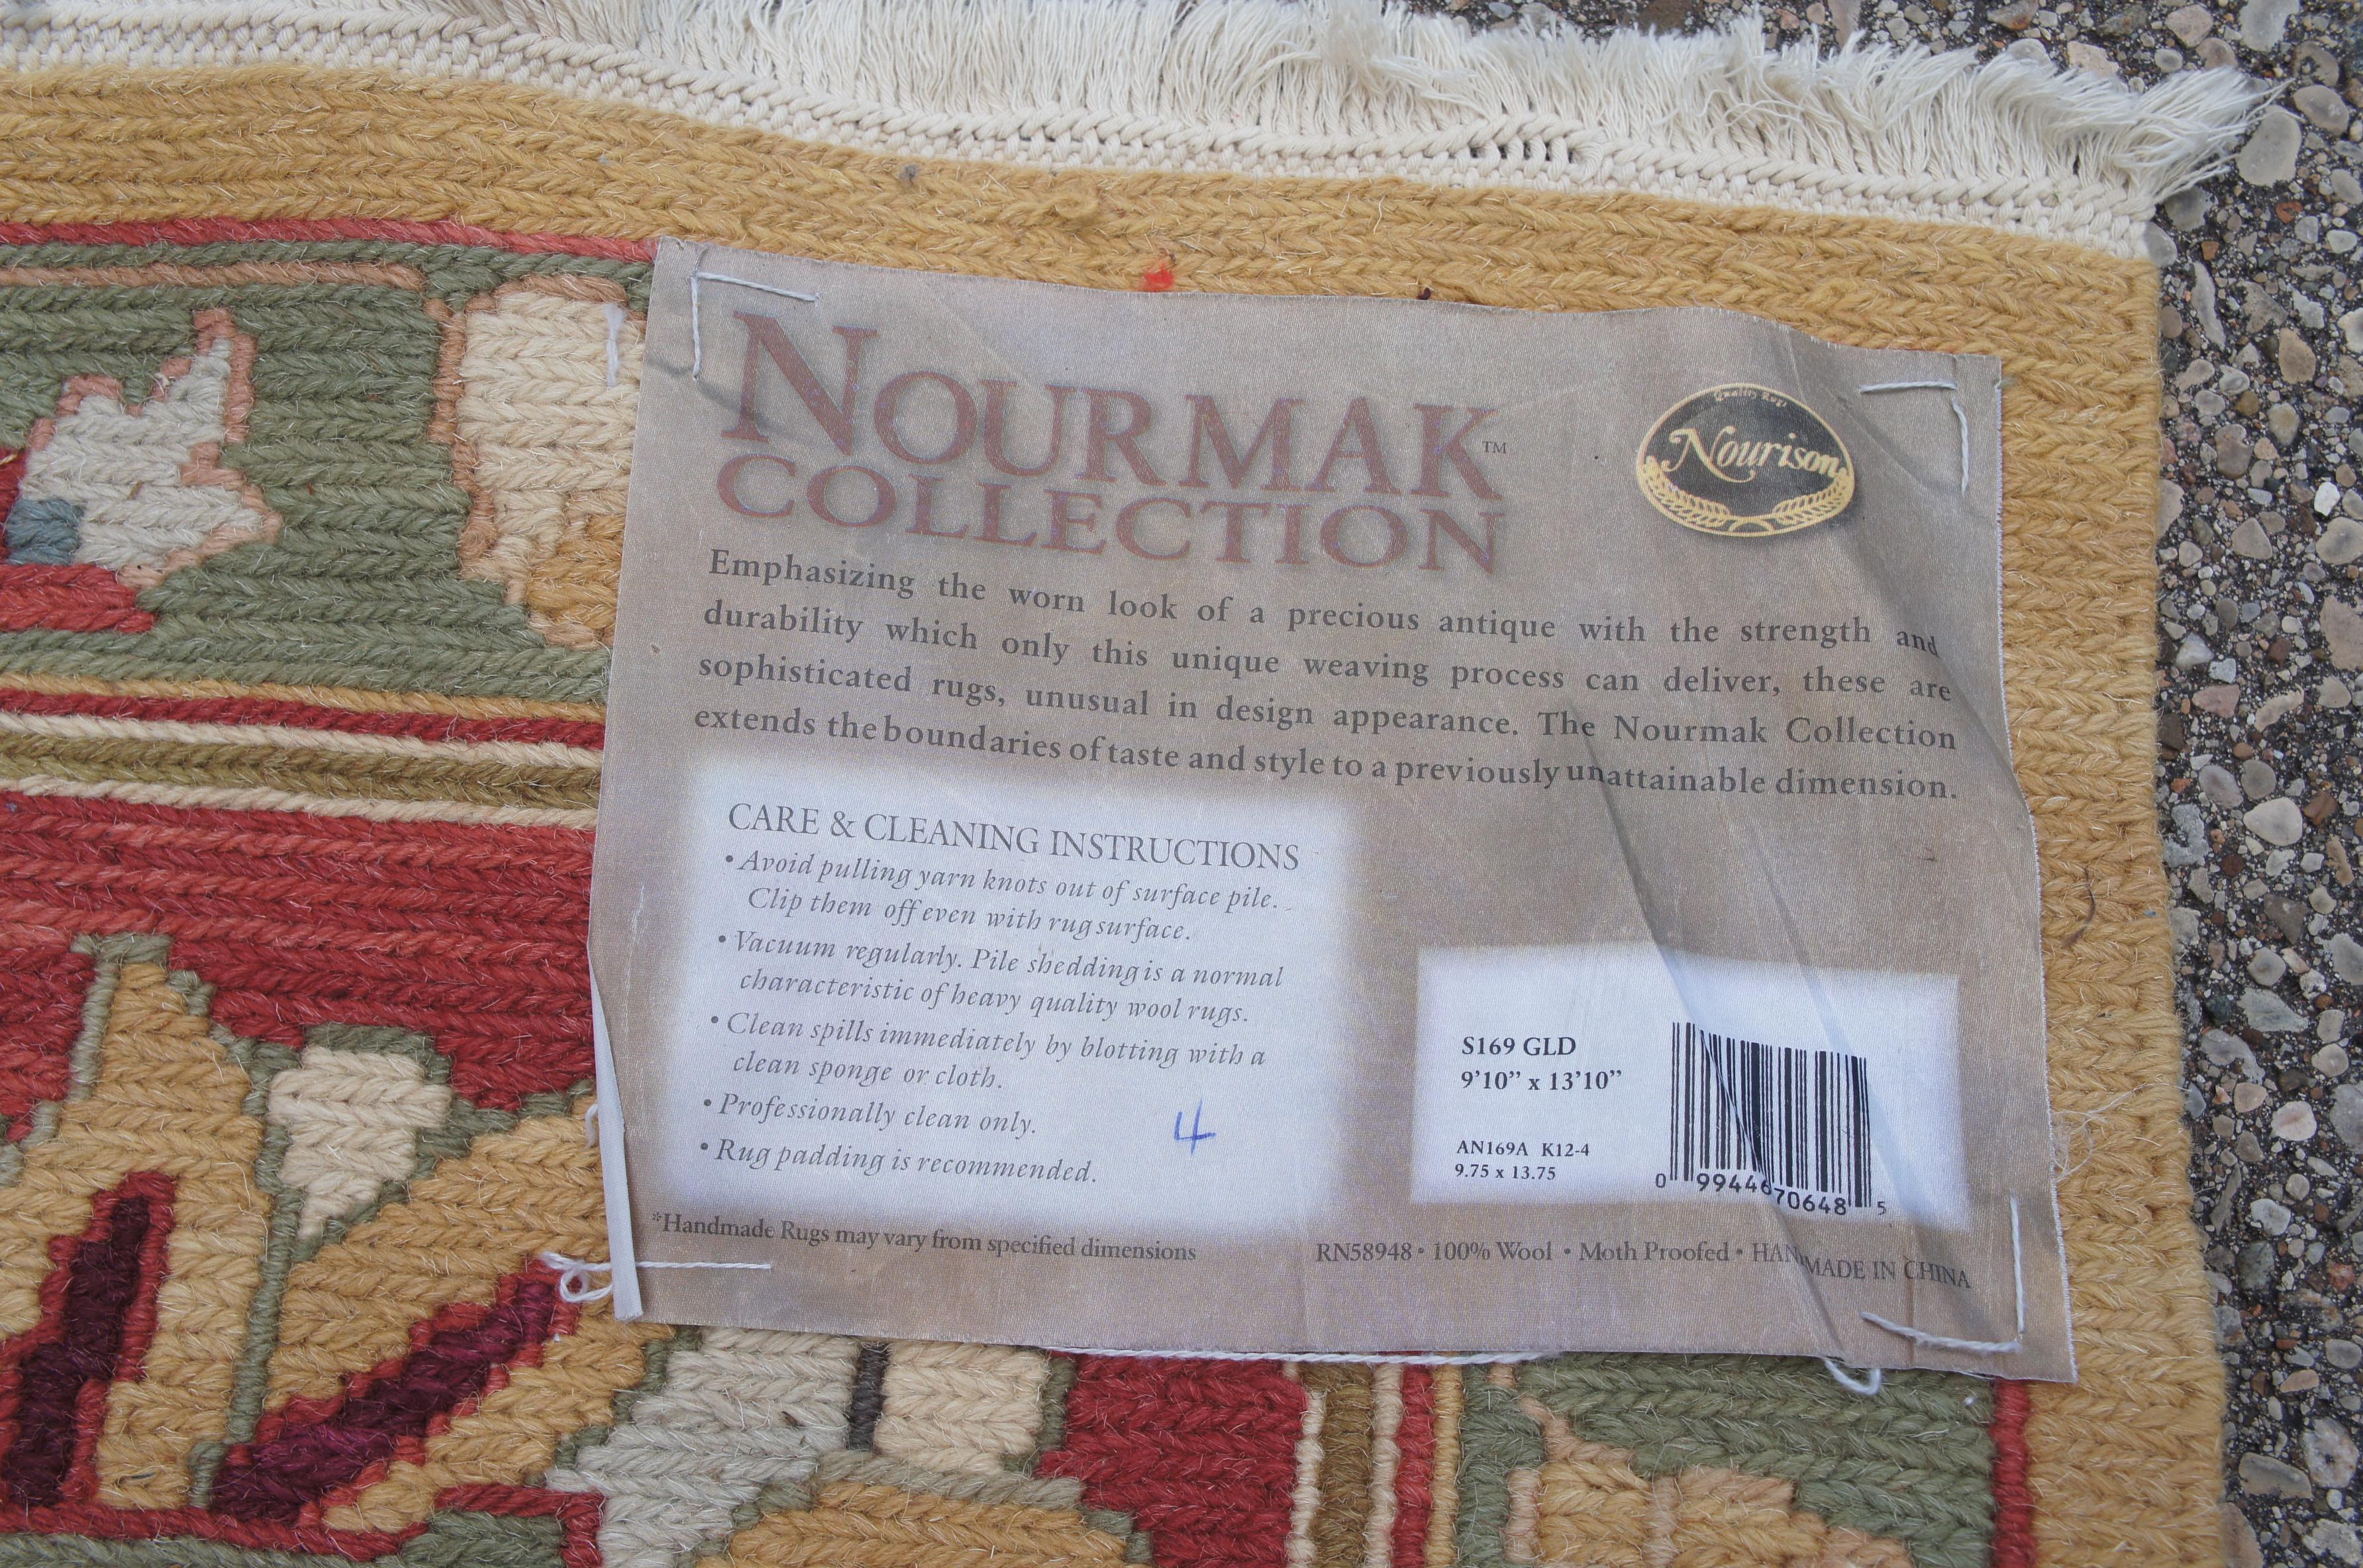 Nourison Nourmak Collection S169 Gold Wool Floral Area Rug Carpet 3